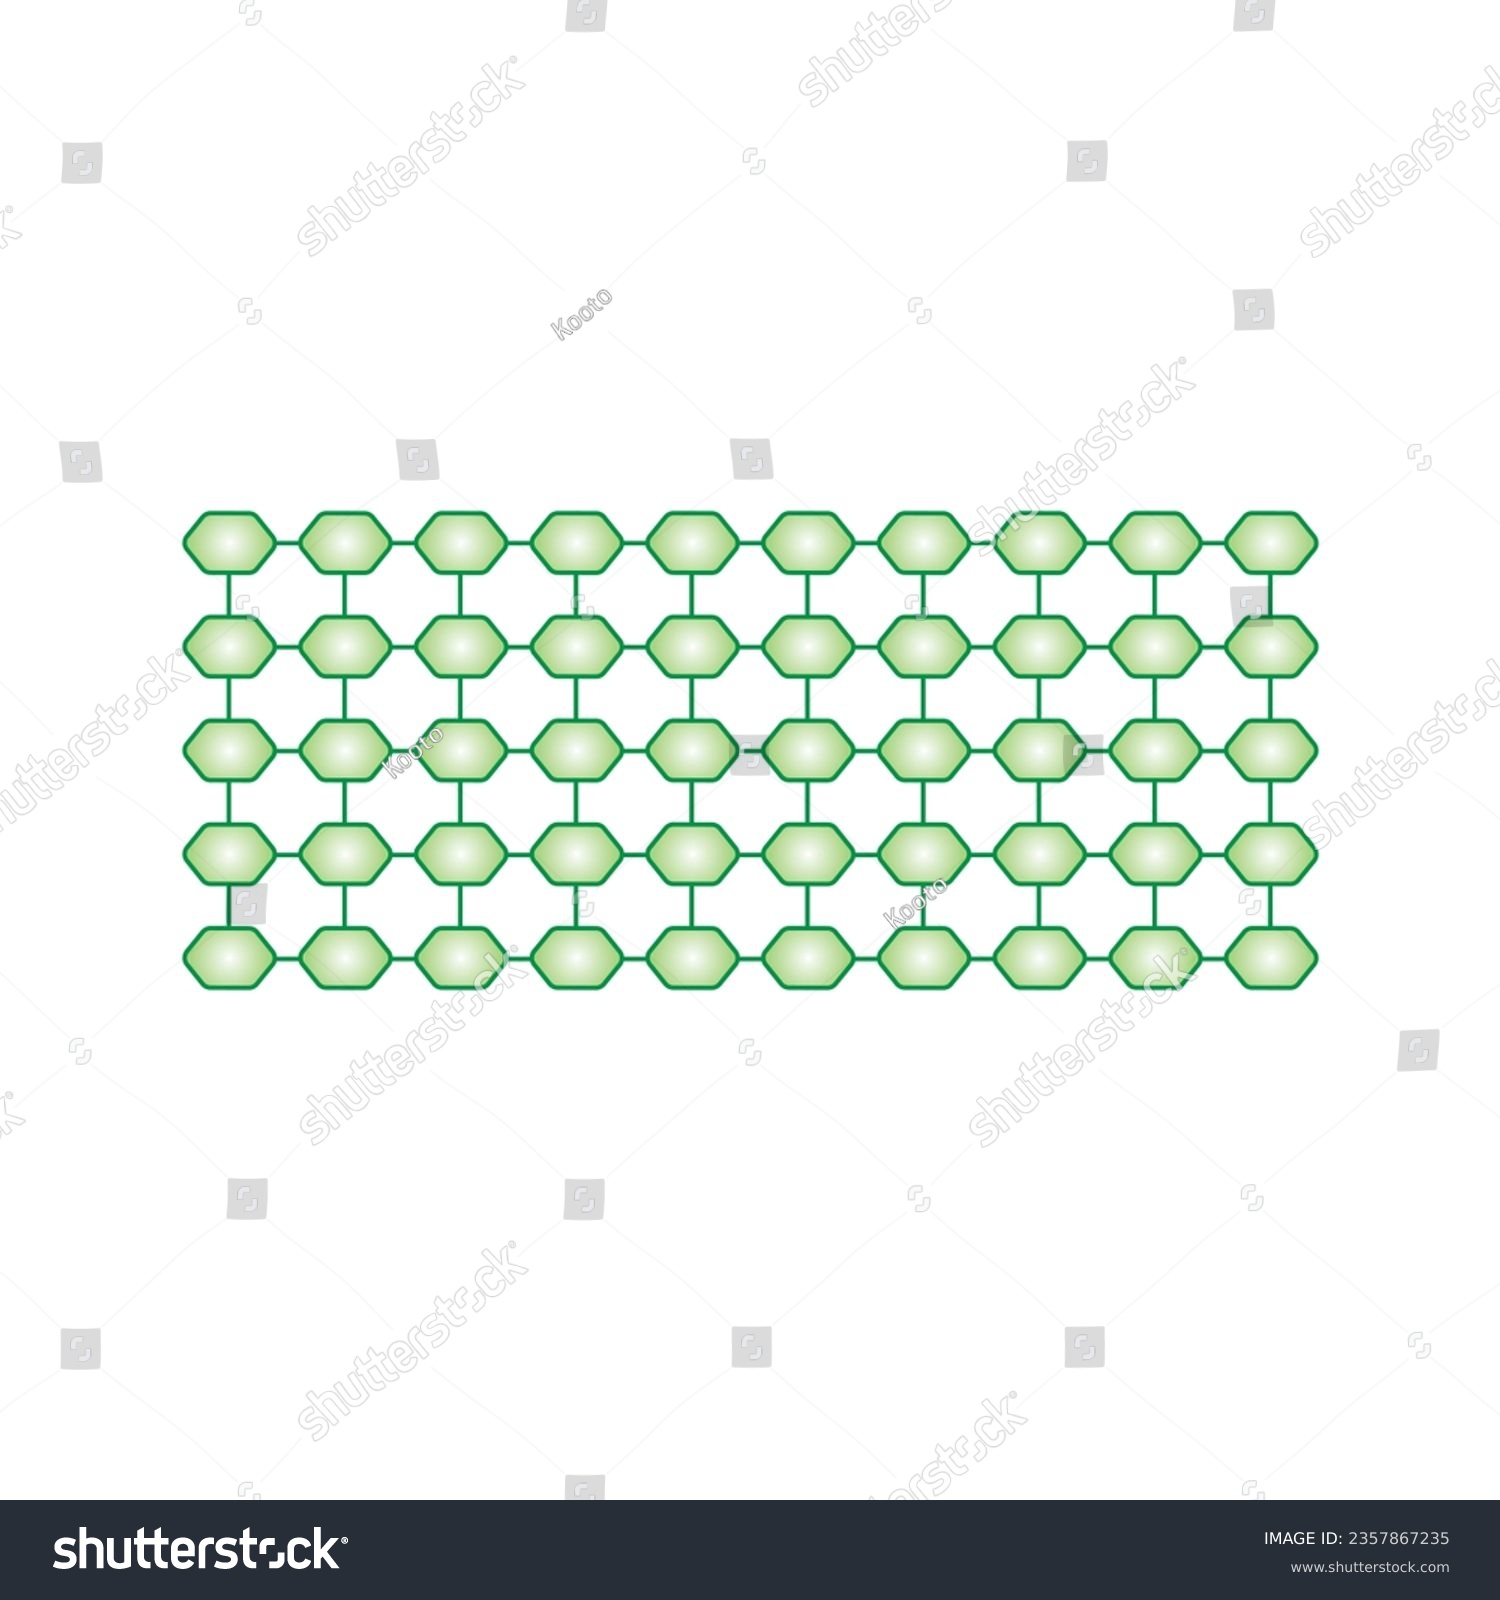 SVG of Cellulose Sugar Molecule Concept Design. Vector Illustration. svg